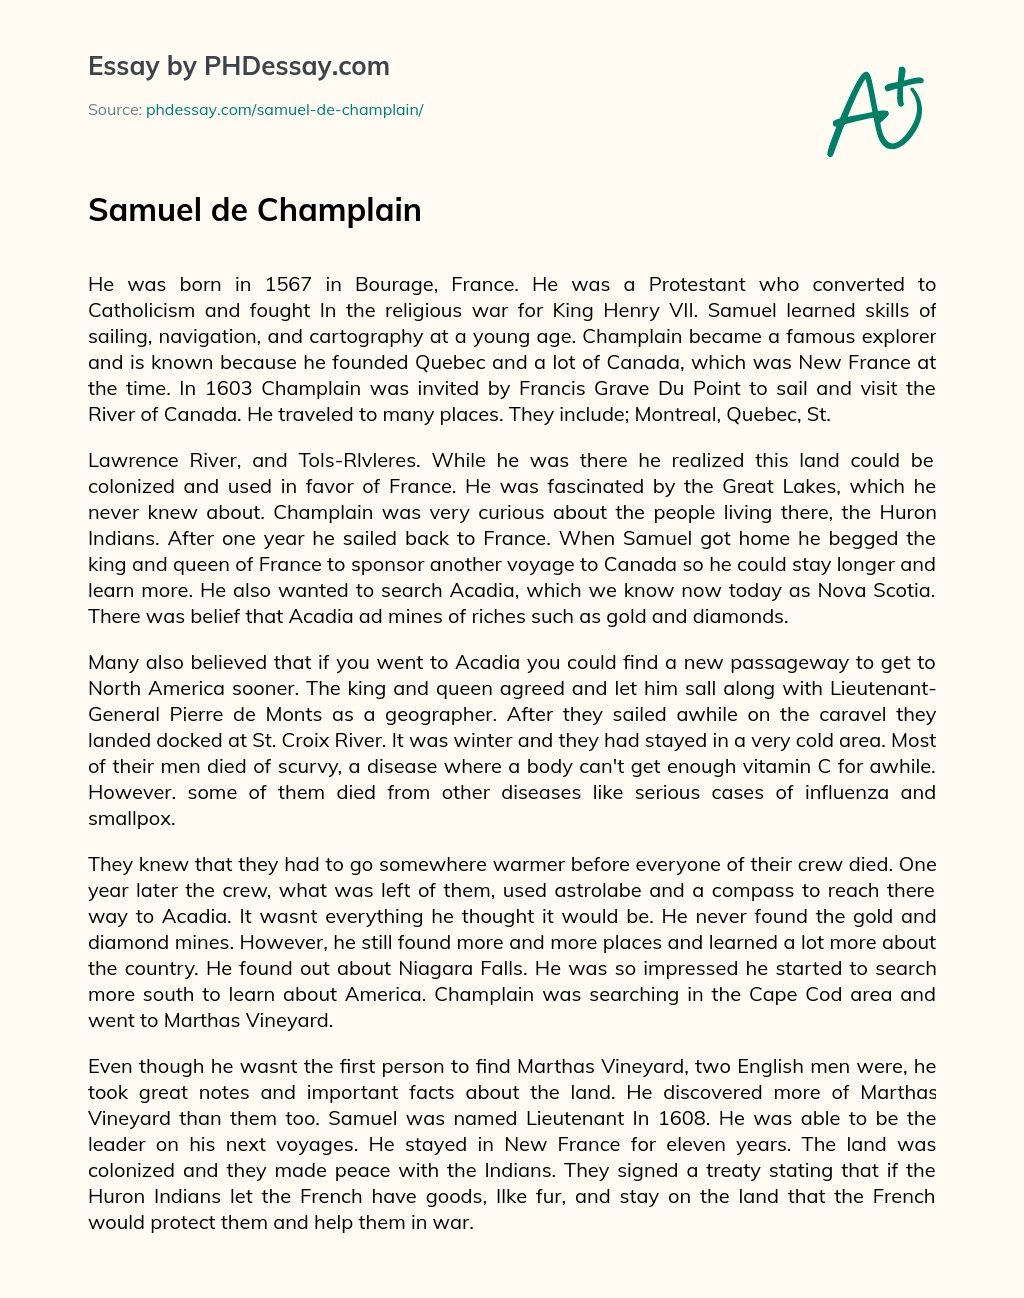 Samuel de Champlain essay